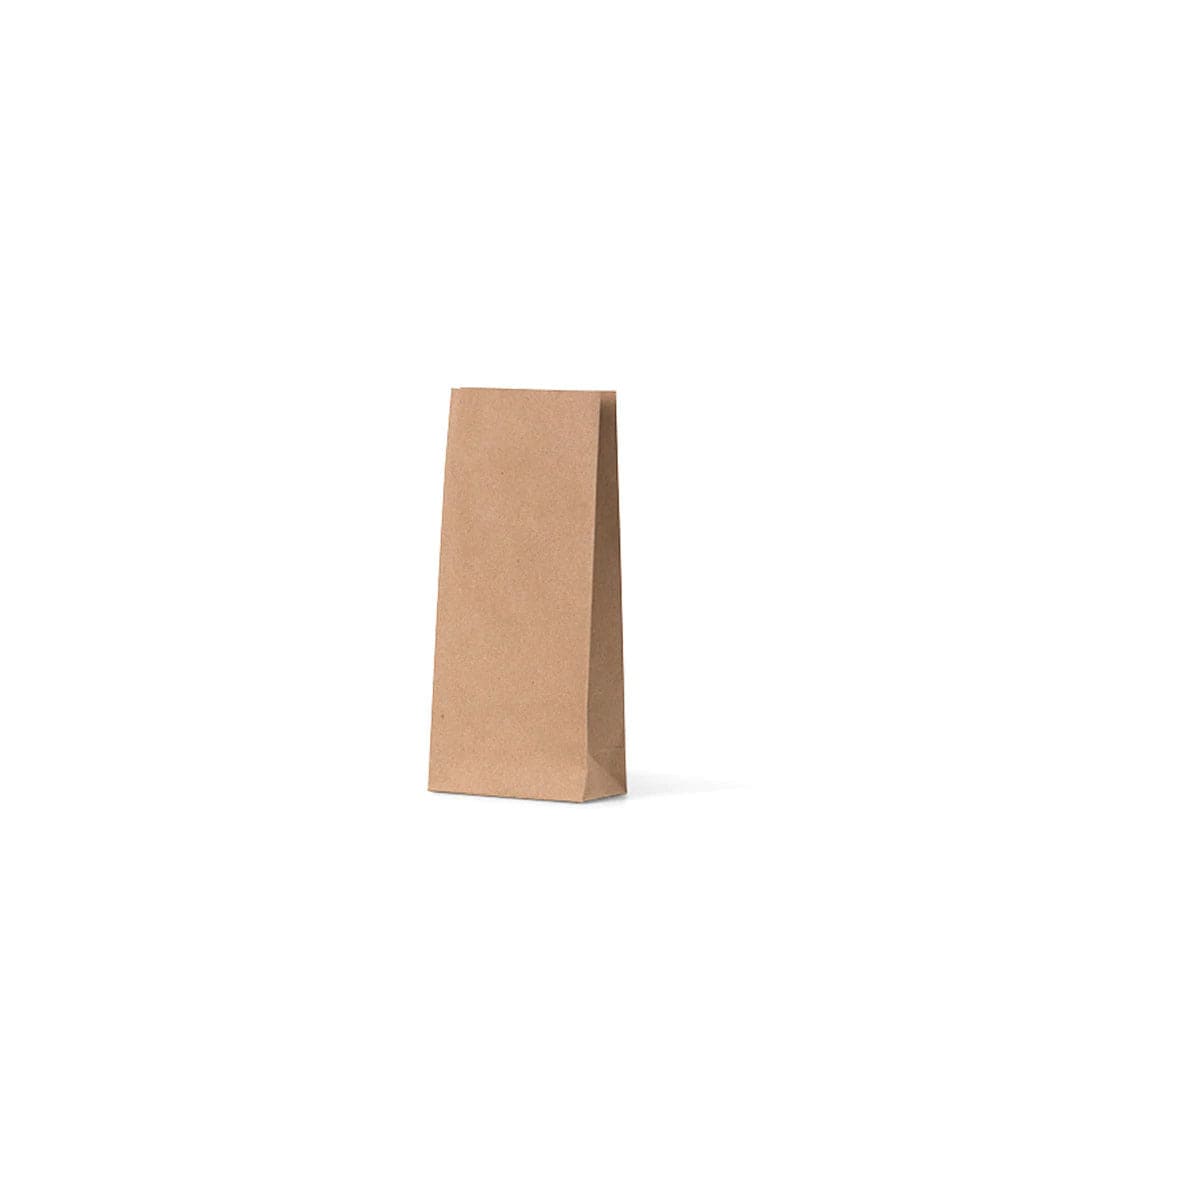 NEON - Flat Bottom Paper Bag - Small no handle